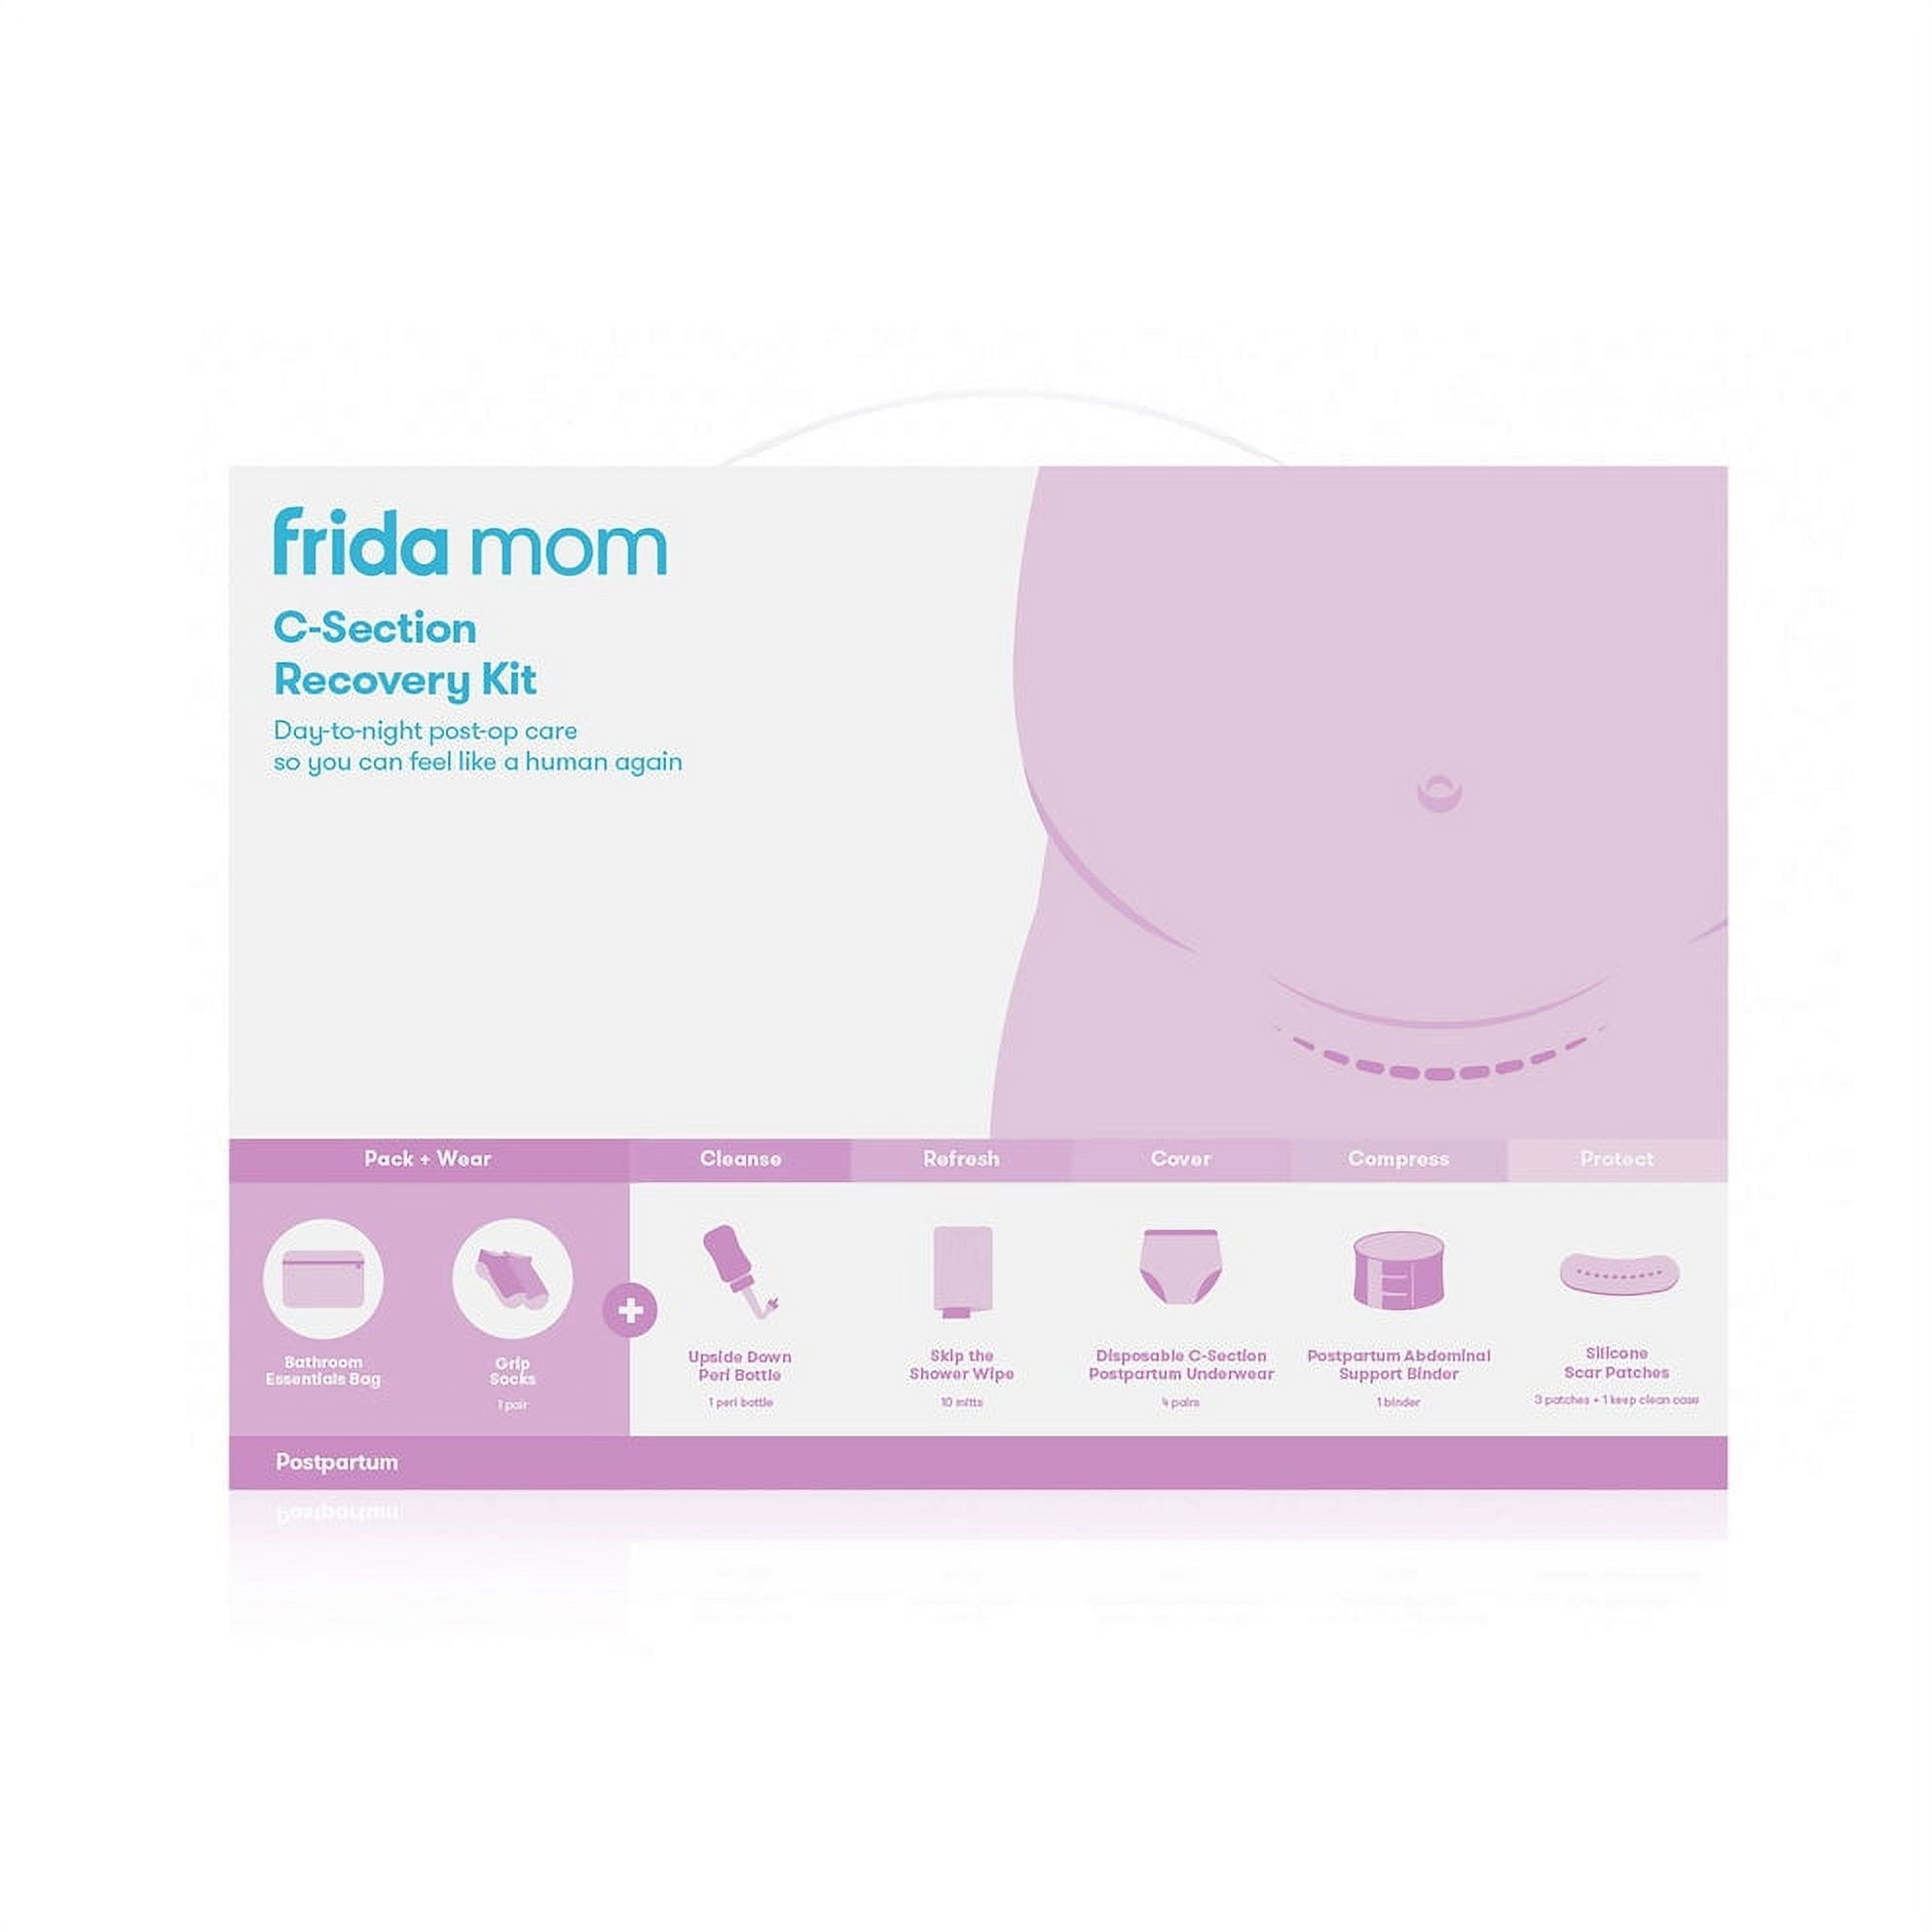 Fridababy Postpartum Abdominal Support Binder - 1 ea